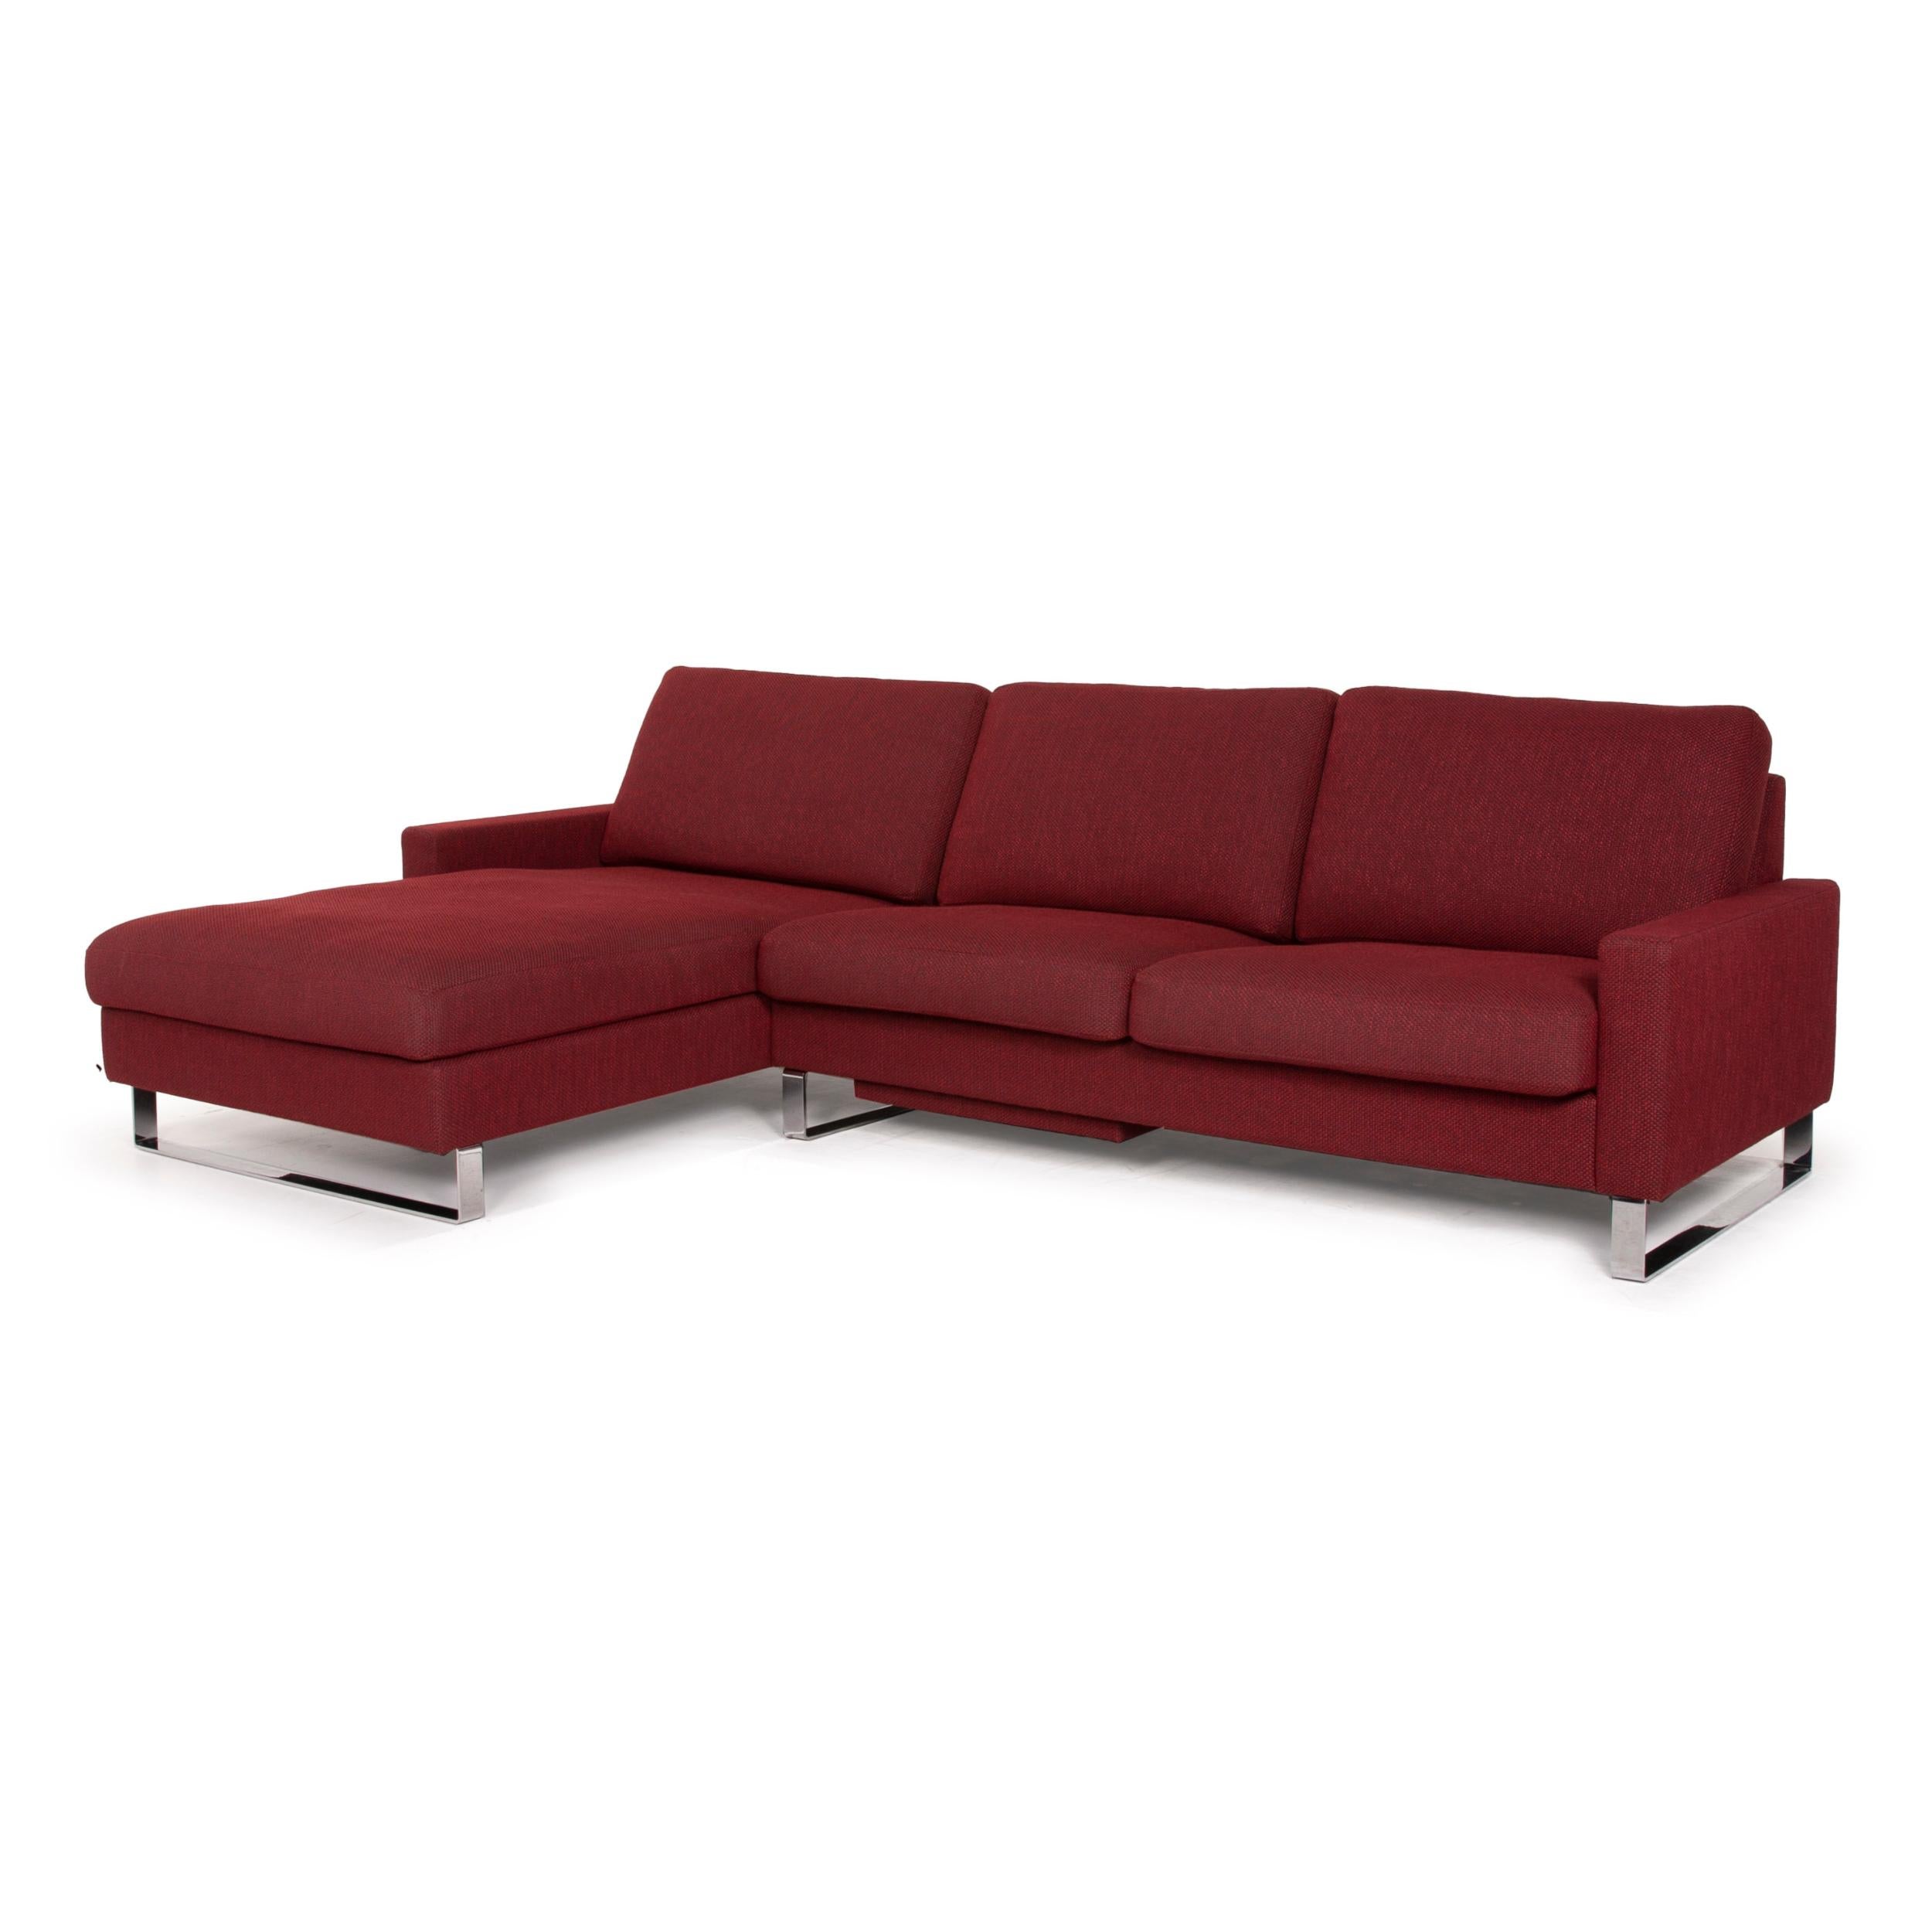 Erpo CL 500 Fabric Sofa Red Corner Sofa 3